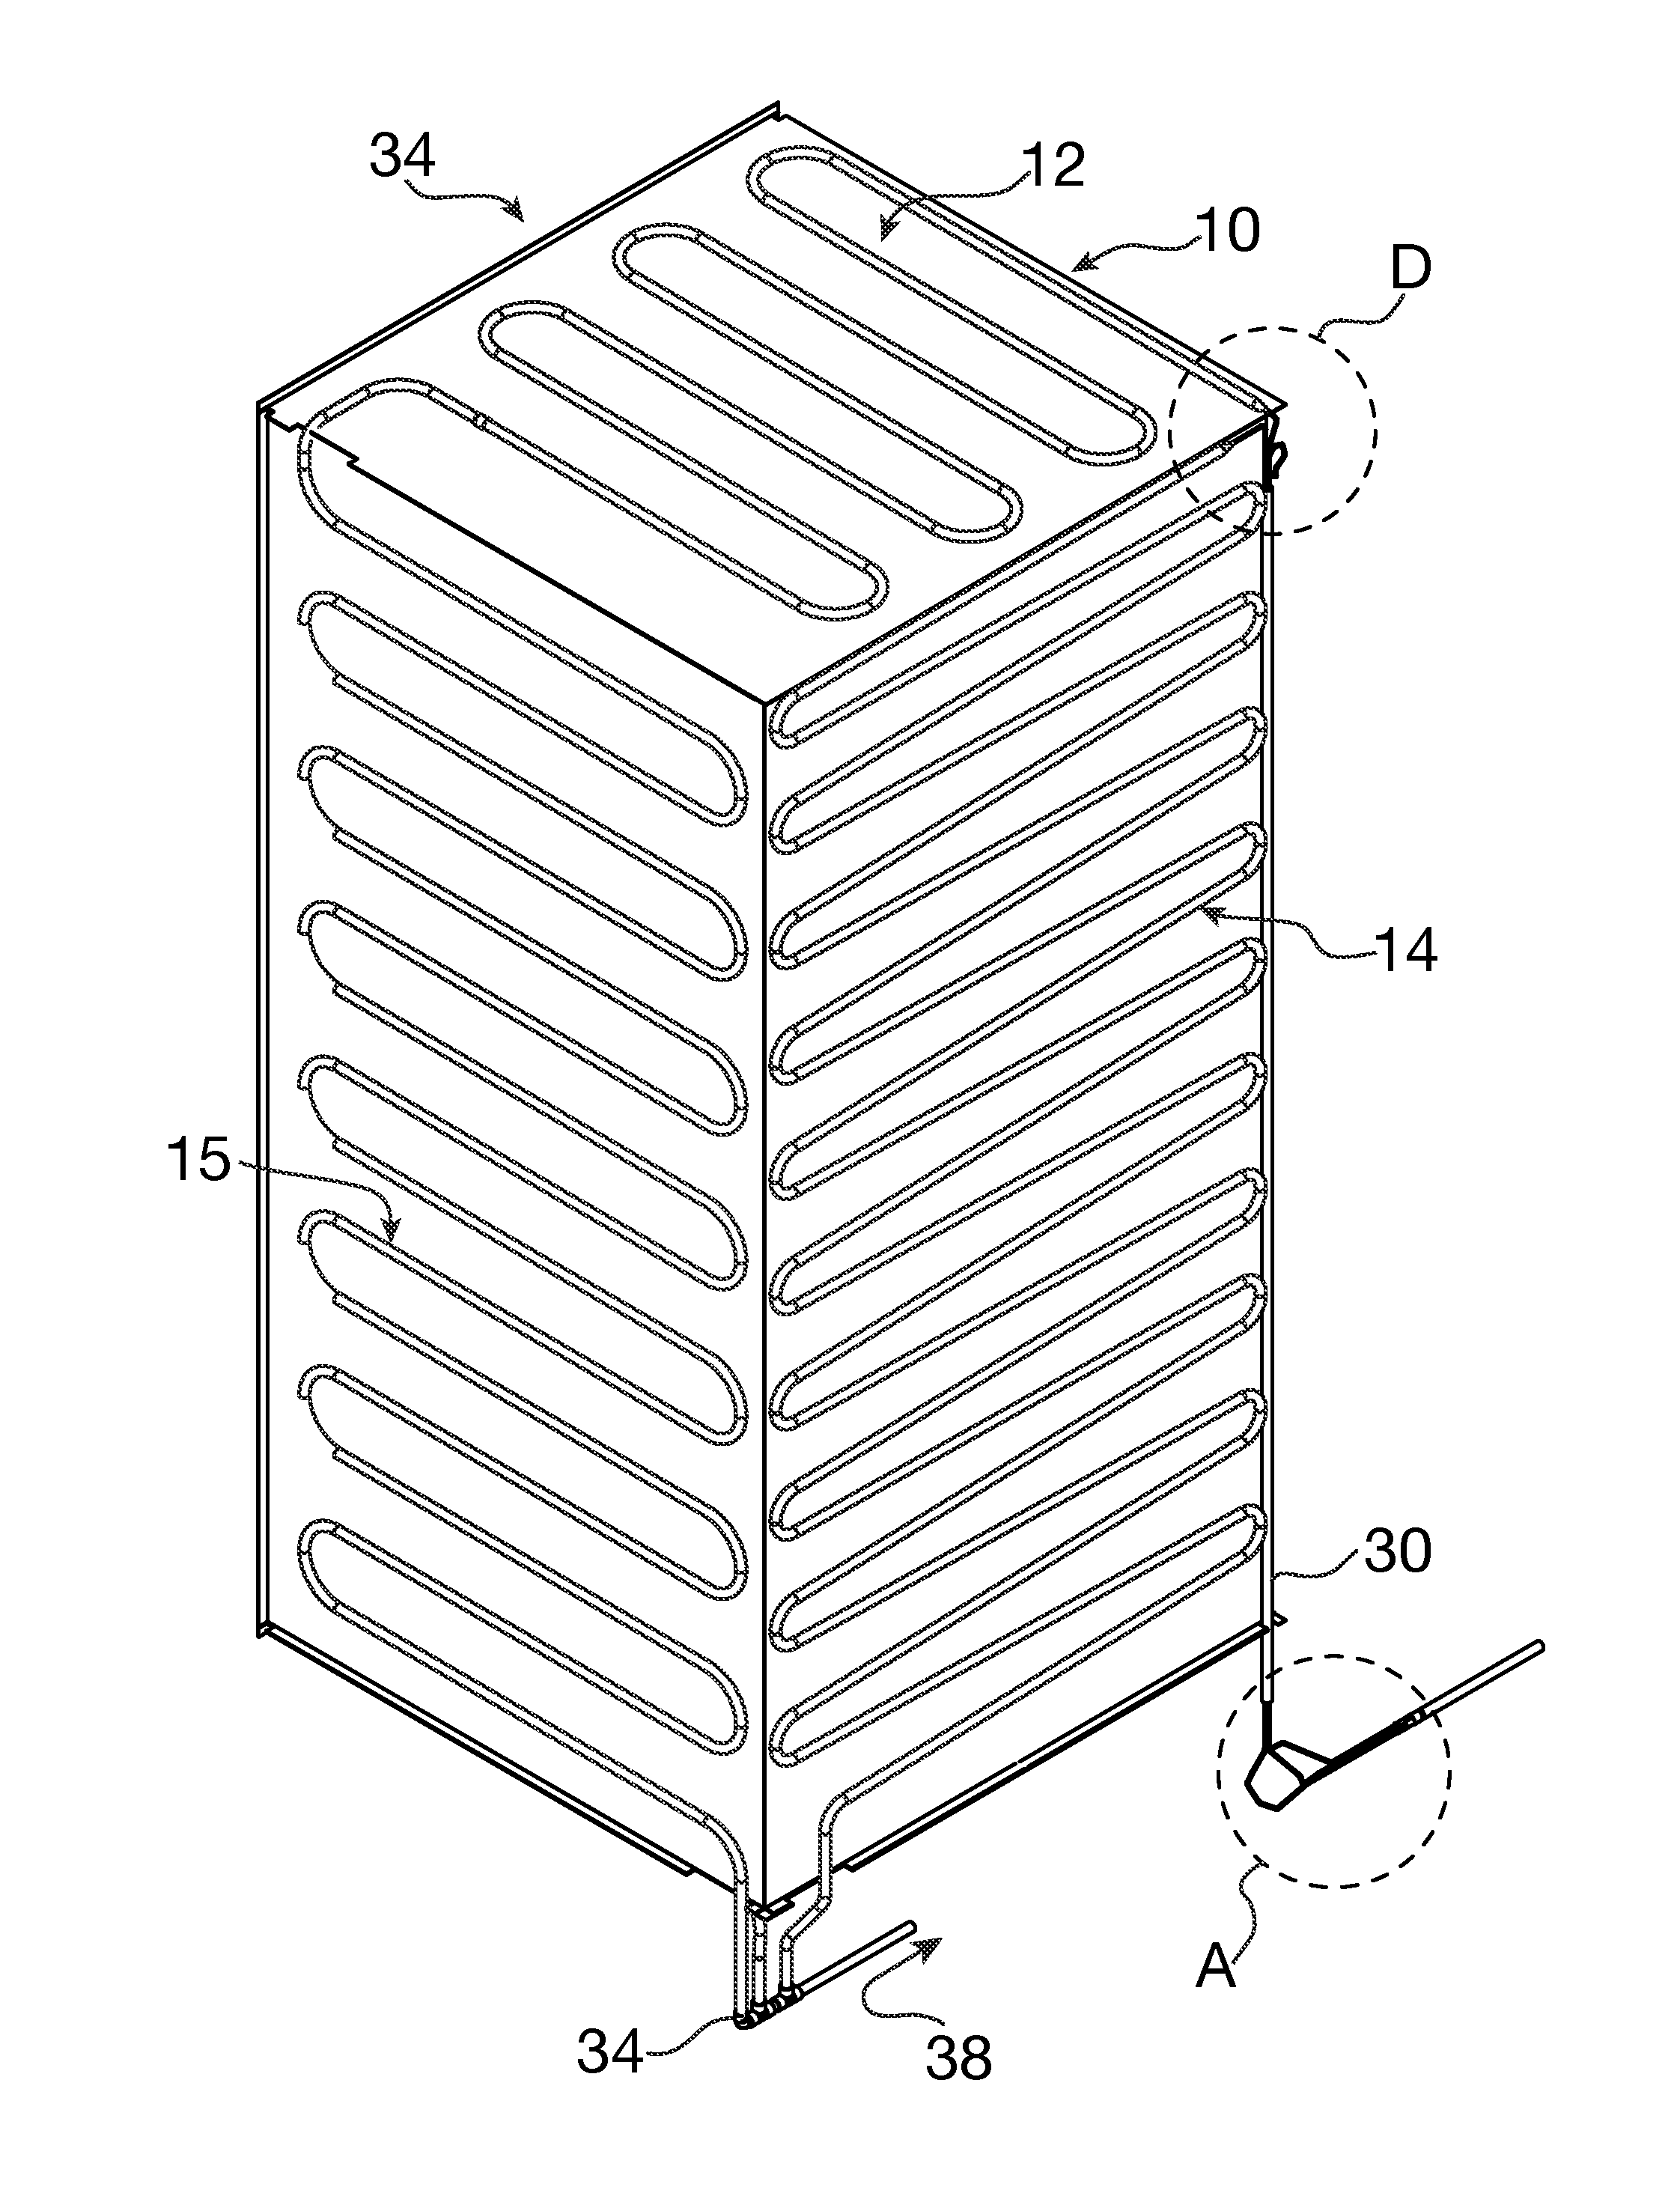 Freezer evaporator apparatus